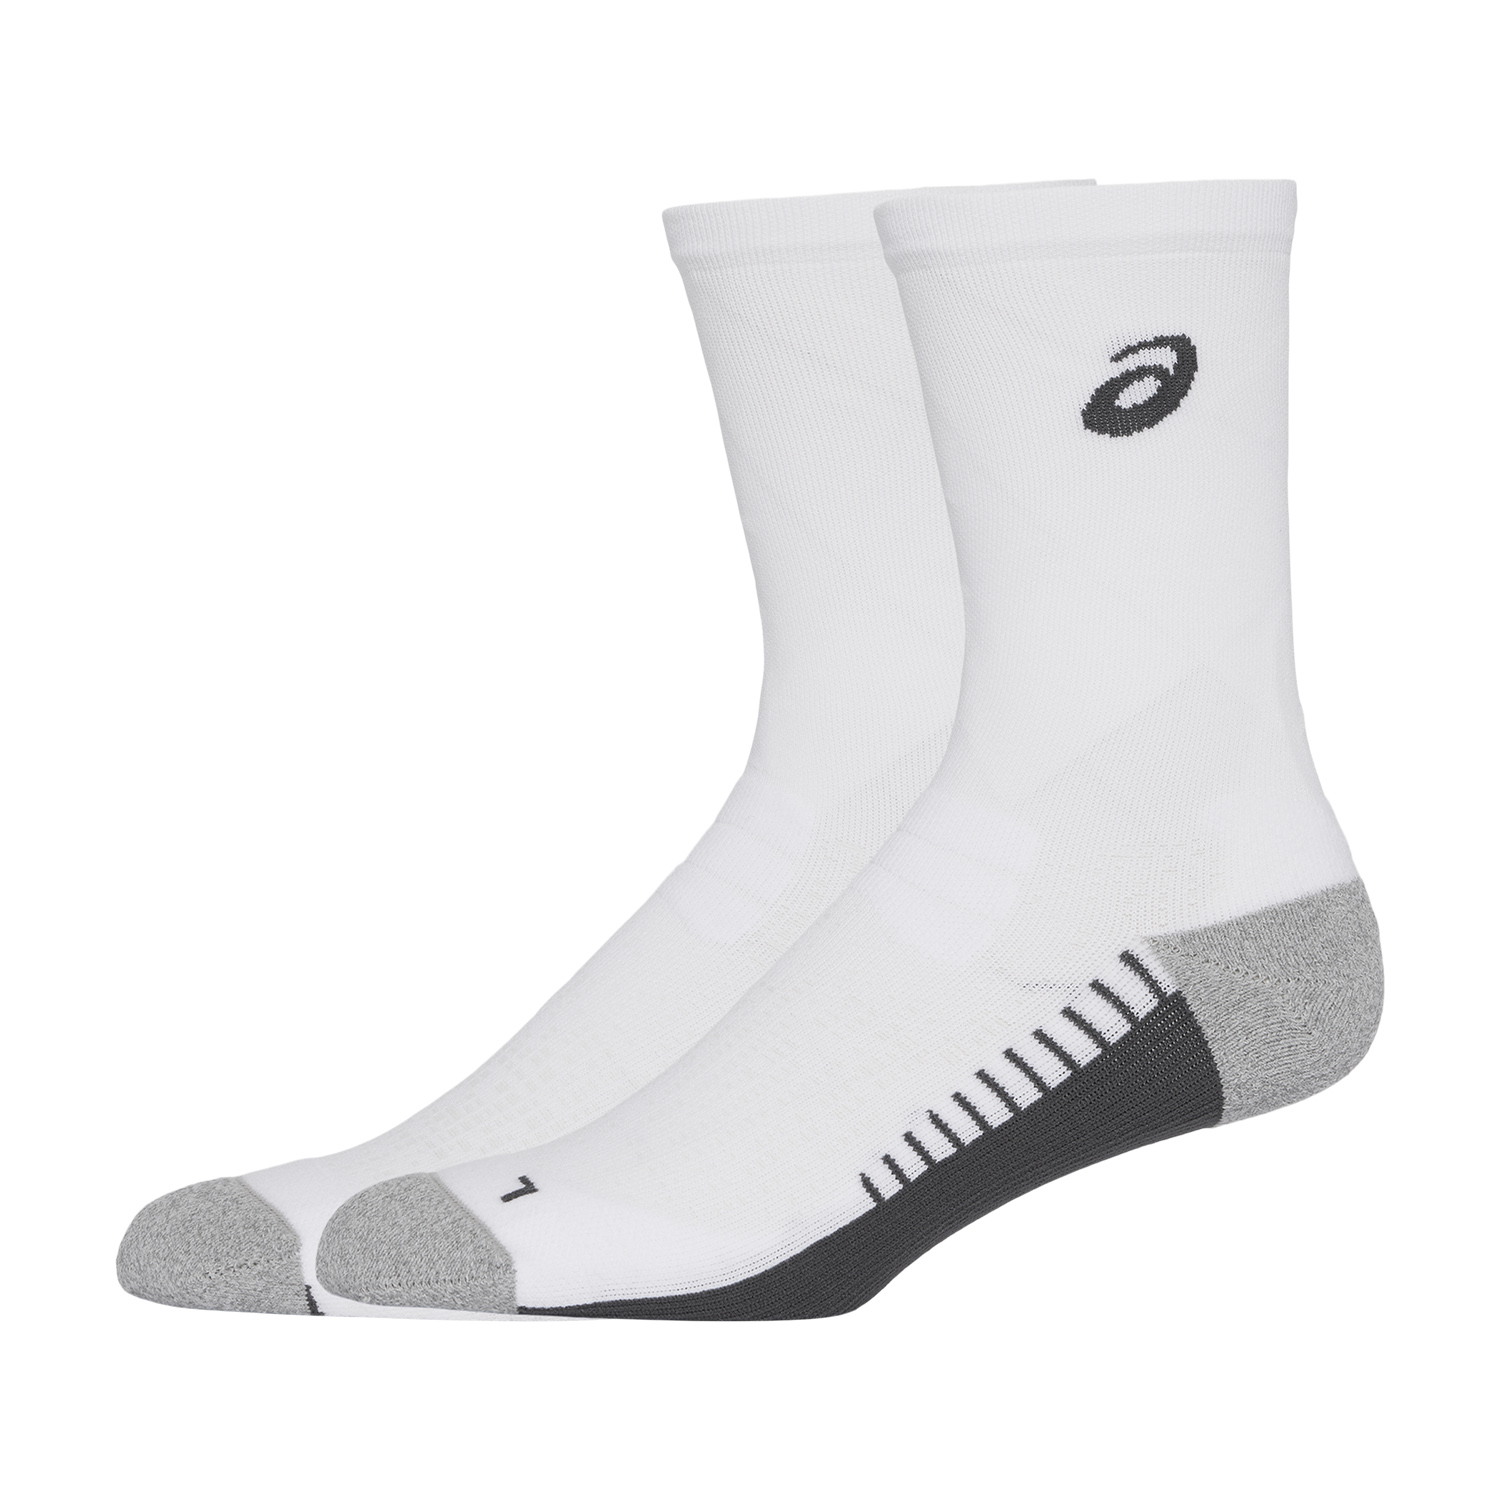 Asics Performance Socks - Brilliant White